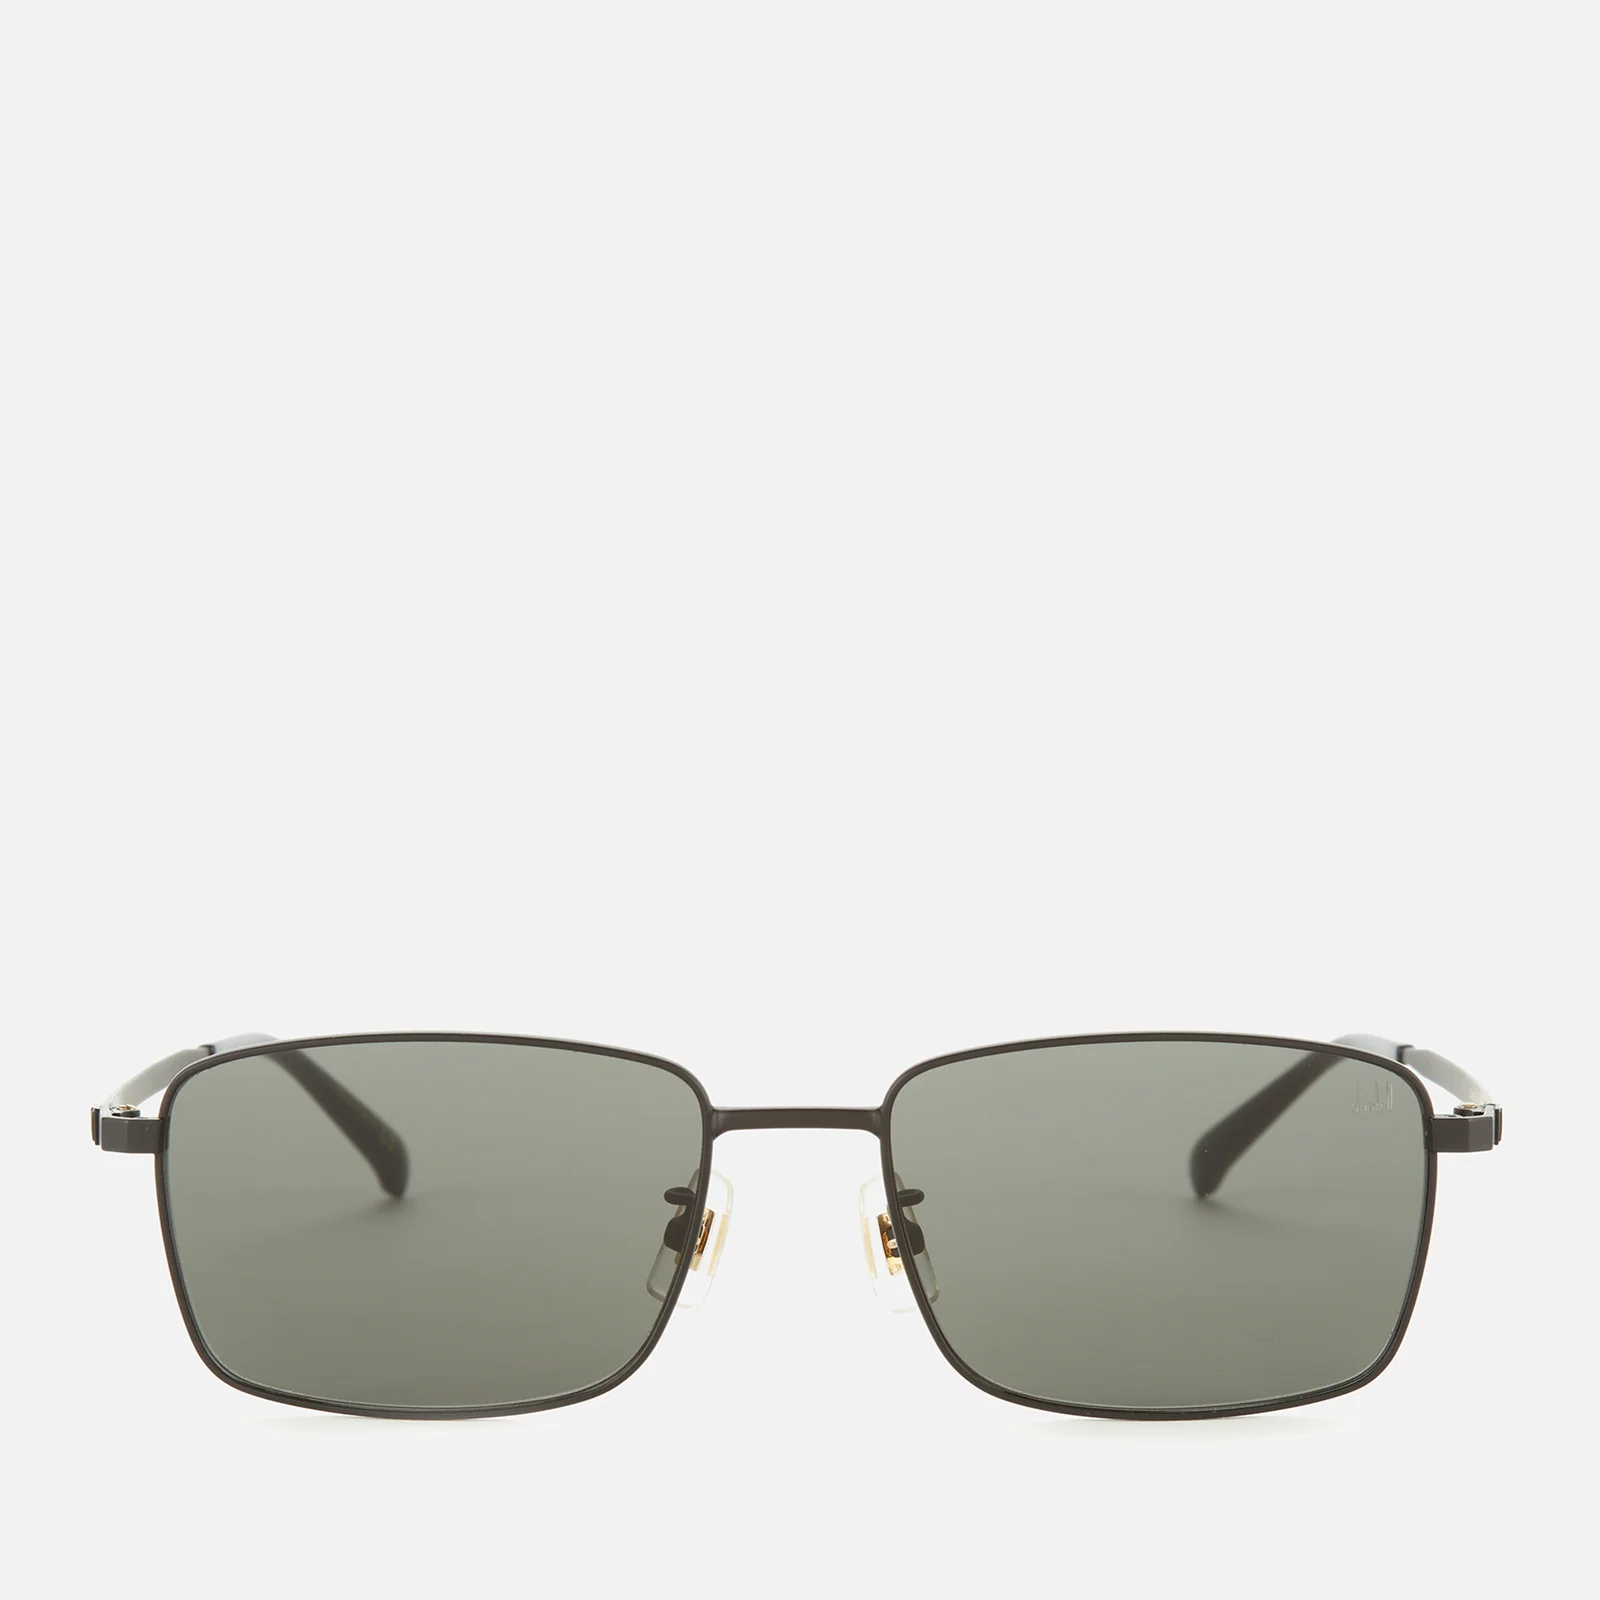 Dunhill Men's Metal Frame Rectangle Sunglasses - Black/Grey Image 1